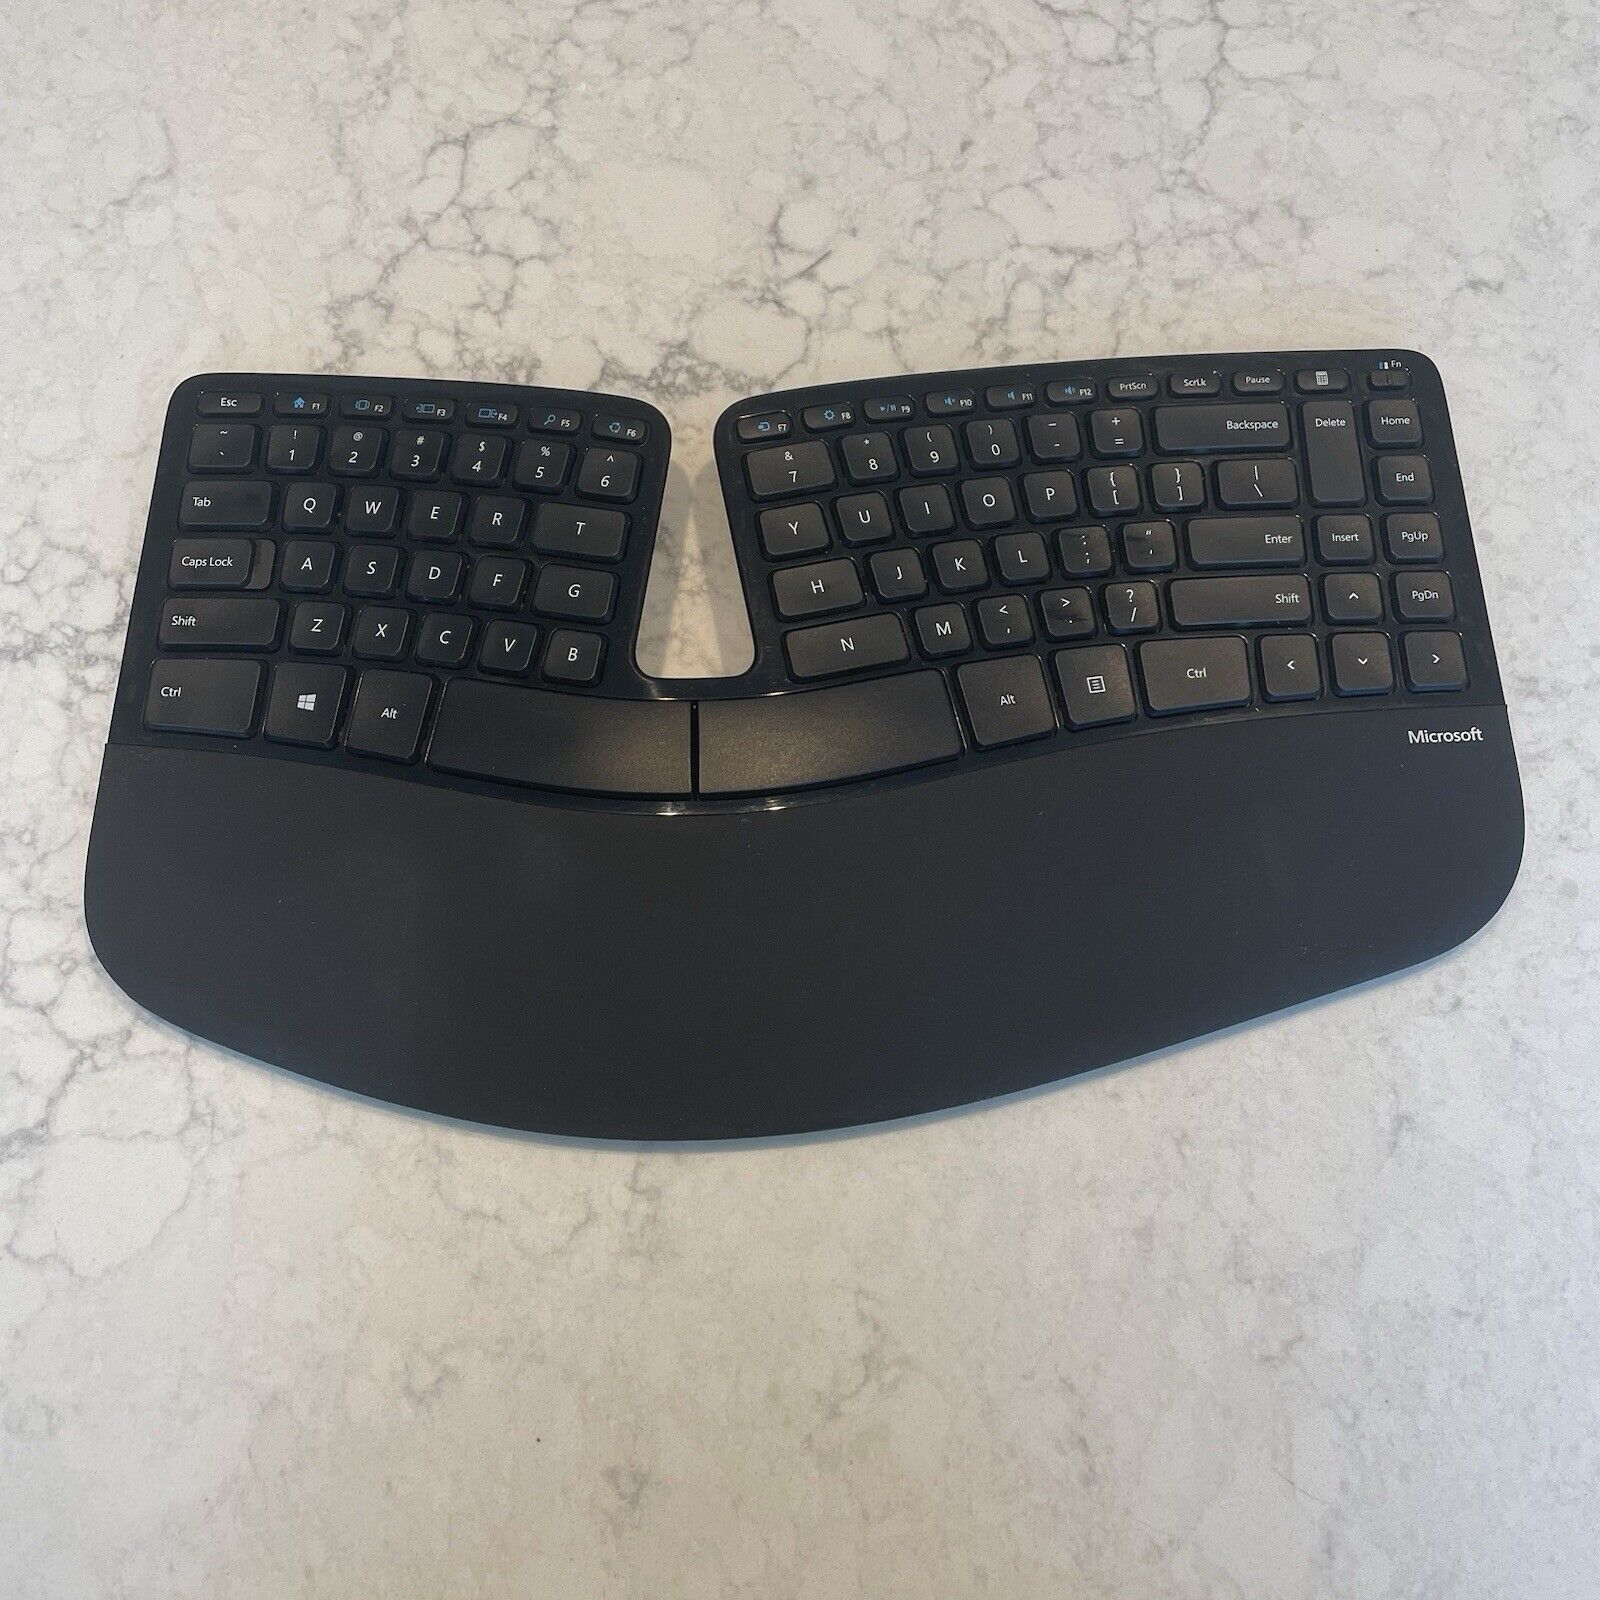 Microsoft Sculpt 1559 Ergonomic Wireless Keyboard